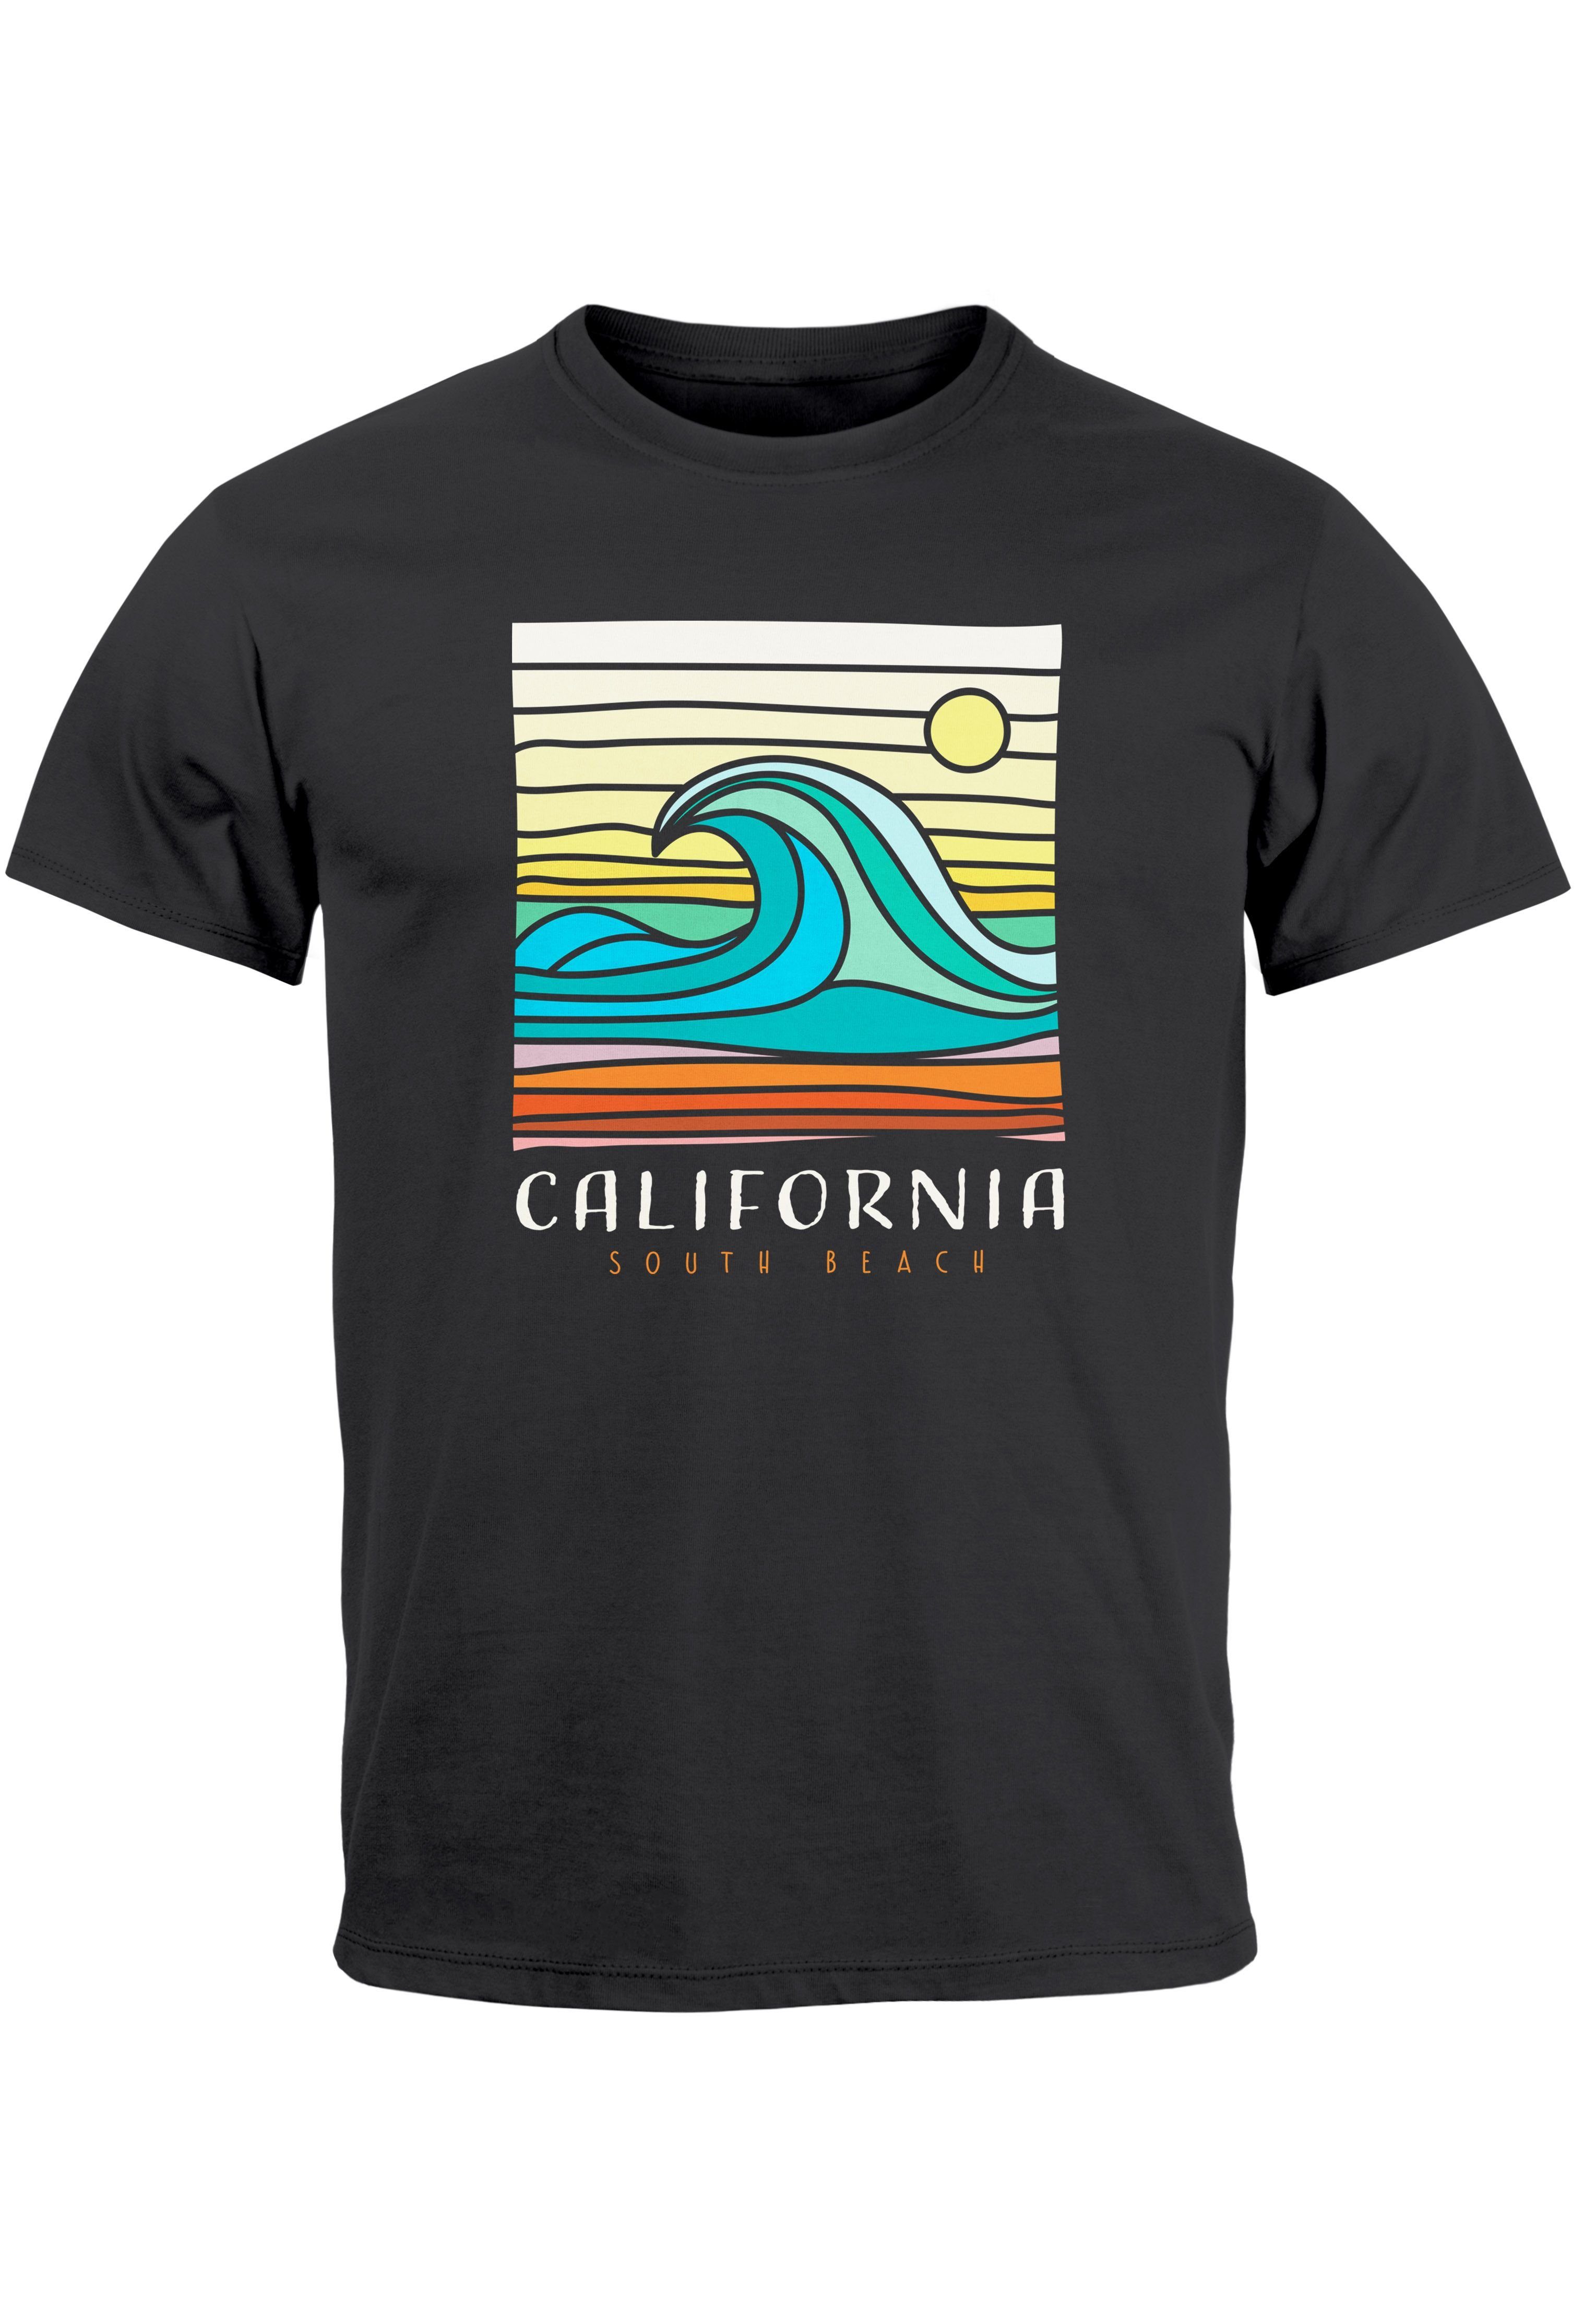 Neverless Print-Shirt Herren T-Shirt California South Beach Welle Wave Surfing Print Aufdruc mit Print anthrazit